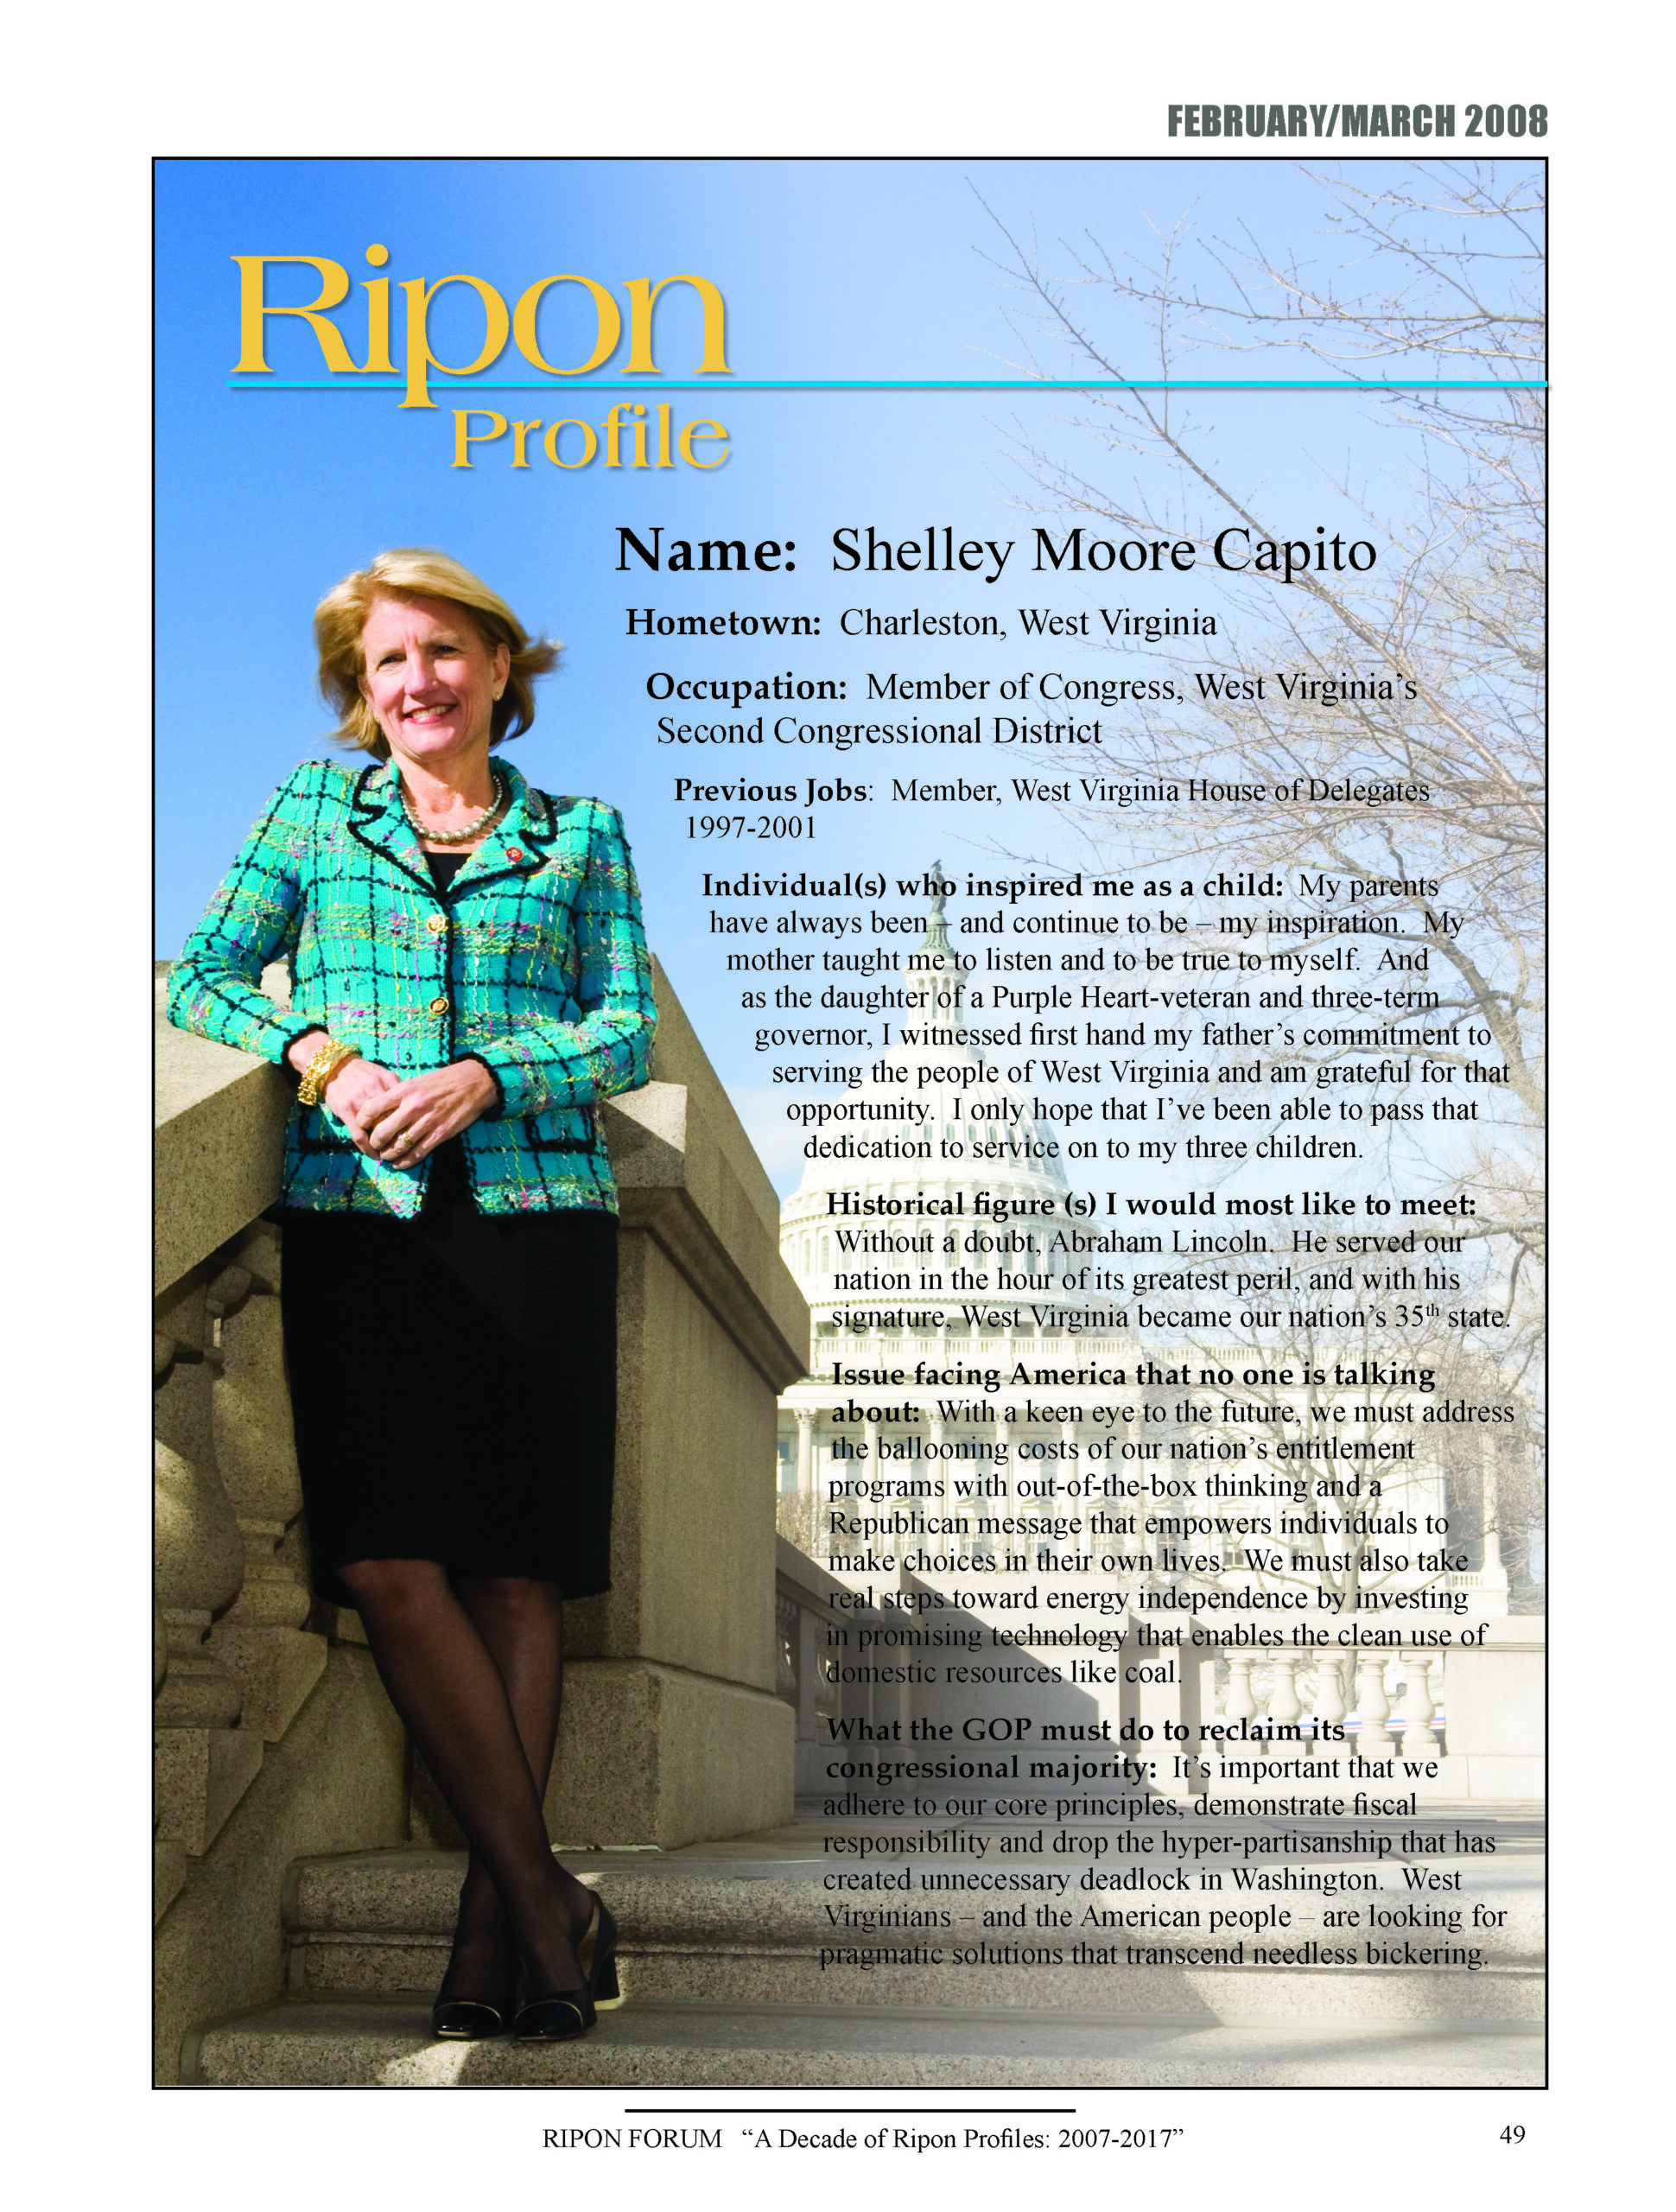 Ripon Profile of Shelley Moore Capito